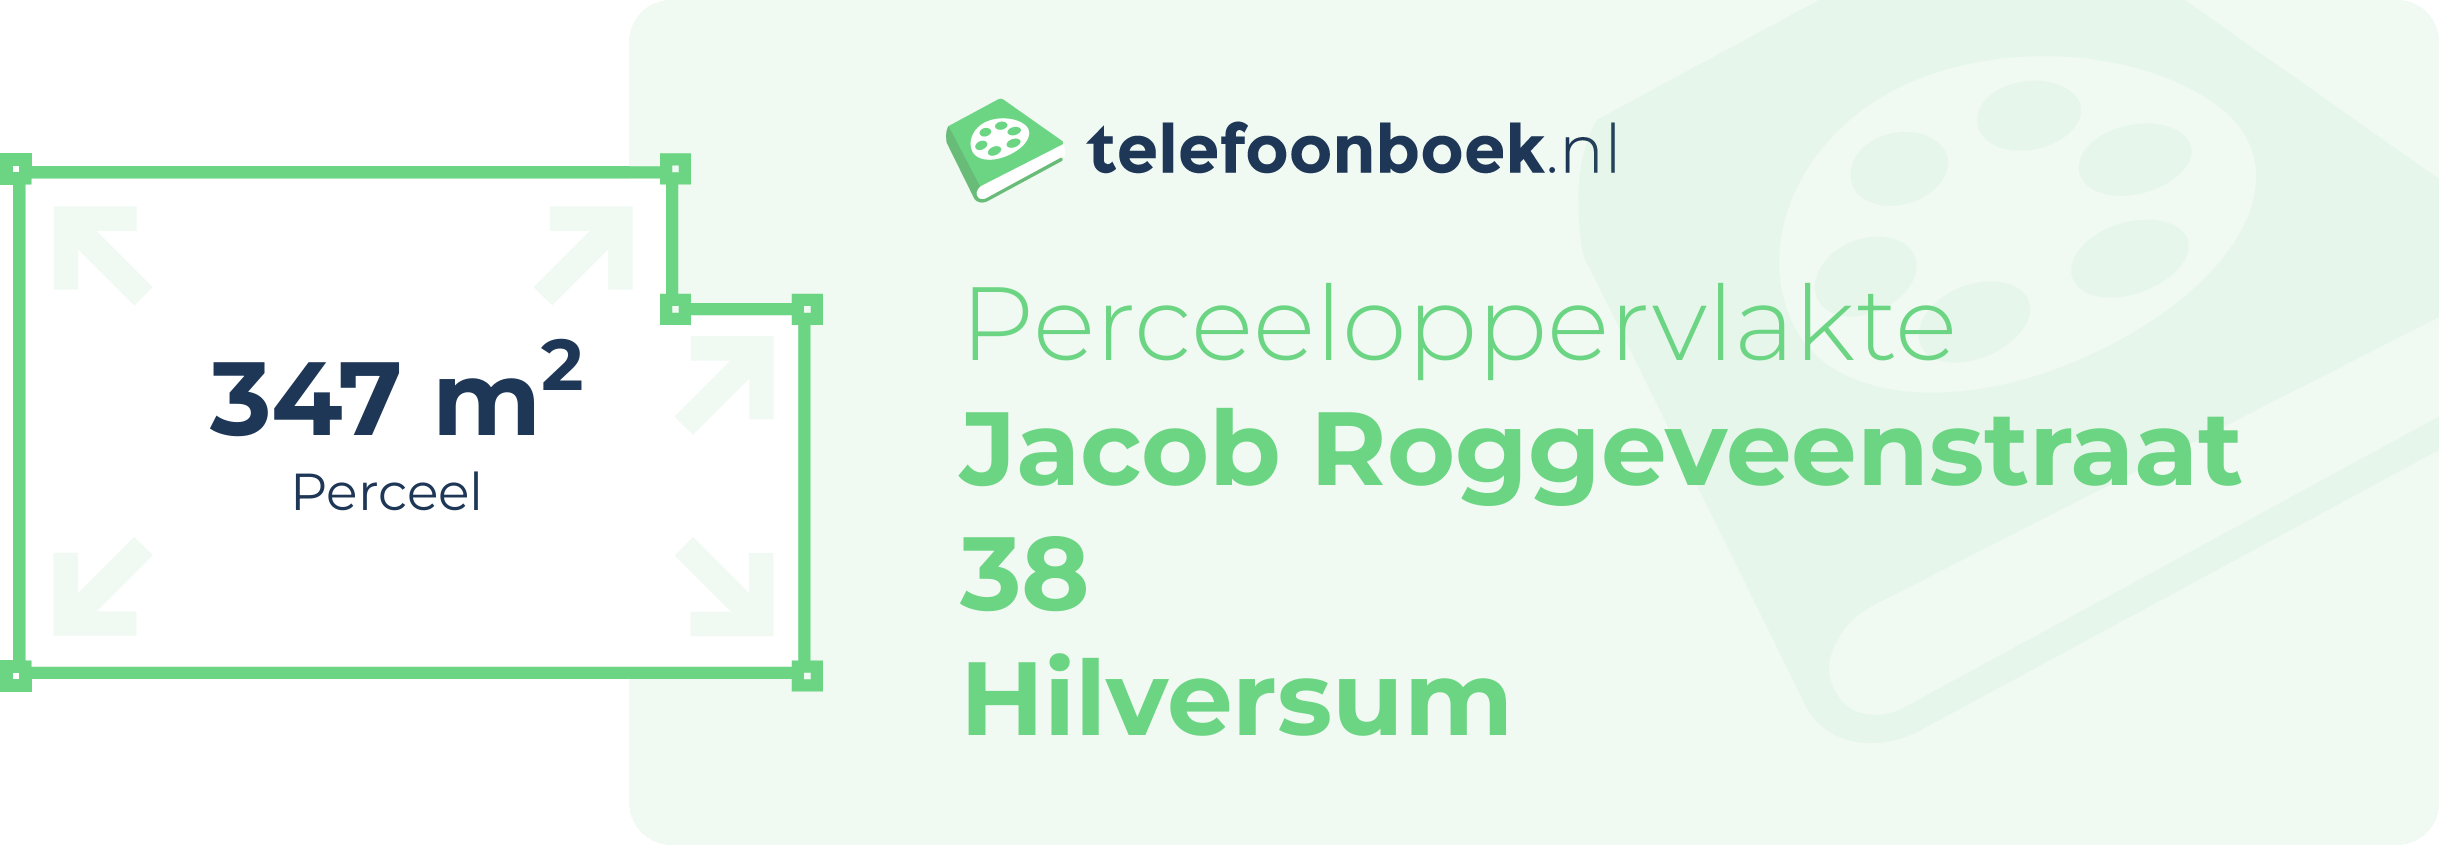 Perceeloppervlakte Jacob Roggeveenstraat 38 Hilversum